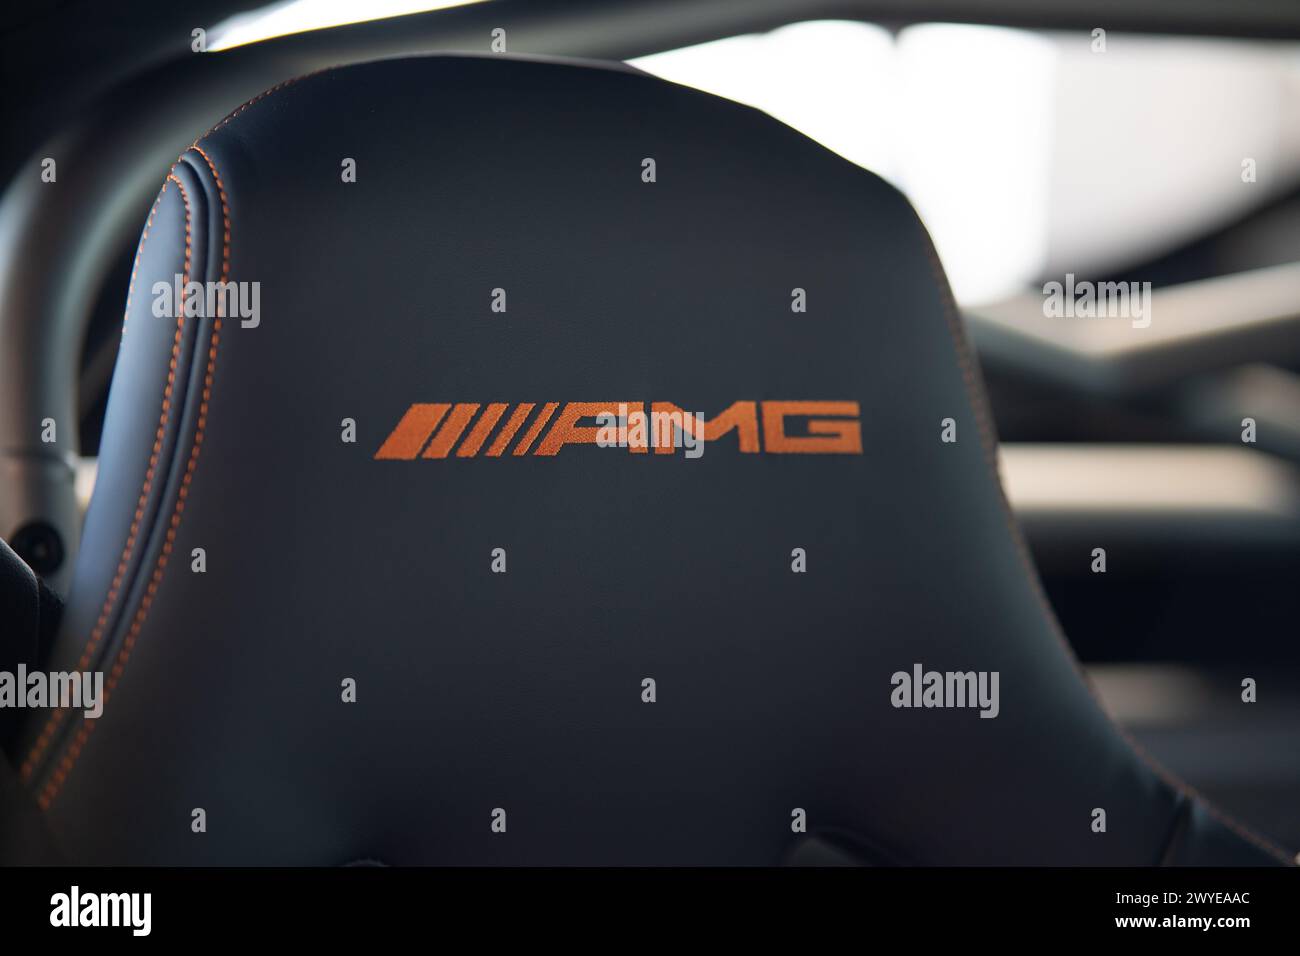 La rare supercar de la Mercedes AMG Division. La série GT Black. Banque D'Images